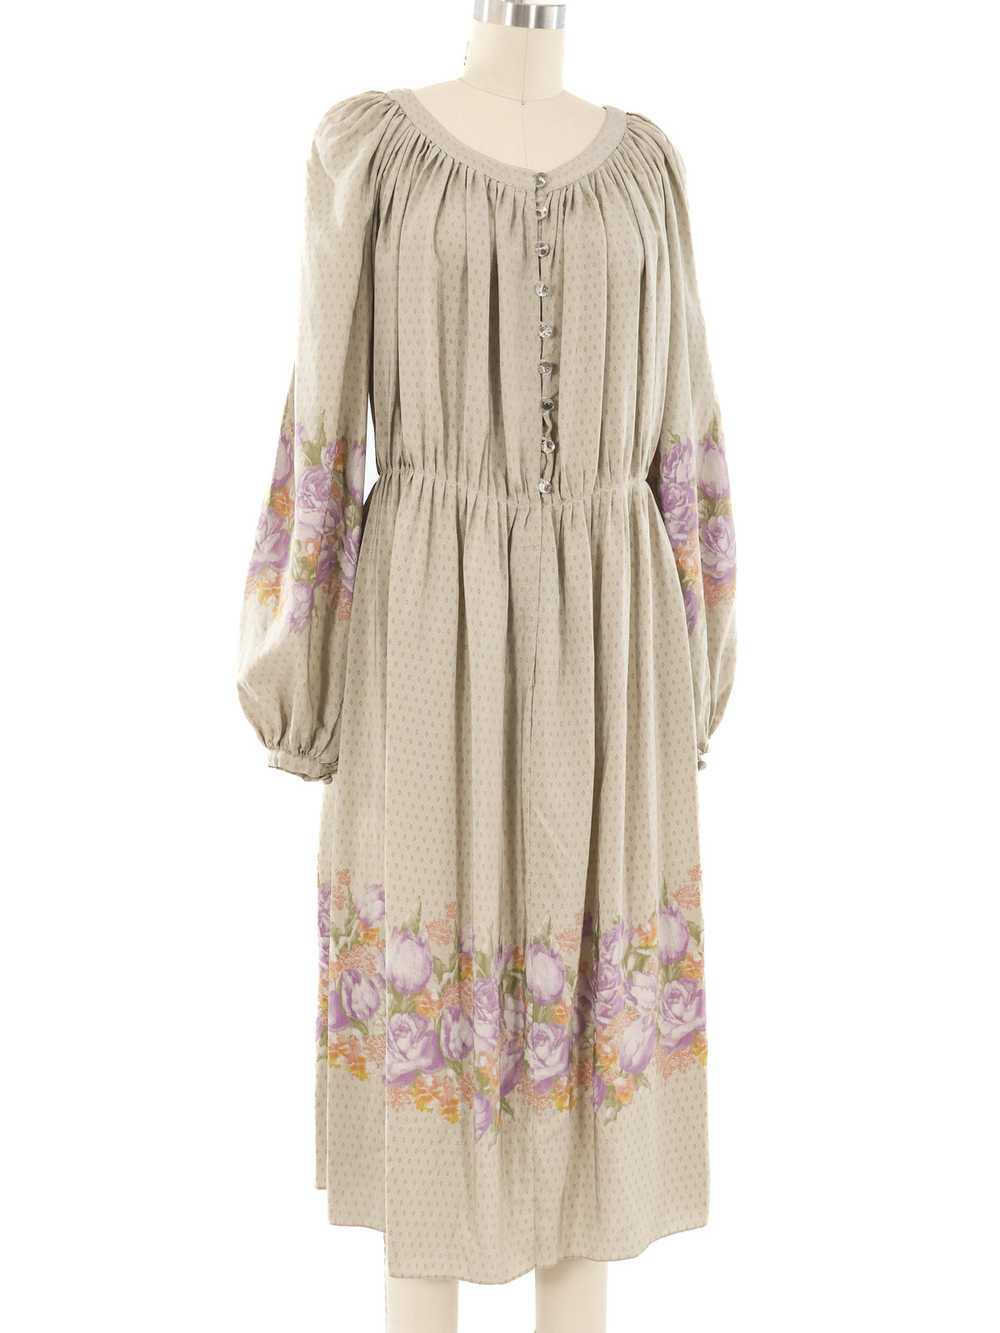 Ted Lapidus Mixed Print Silk Dress - image 3